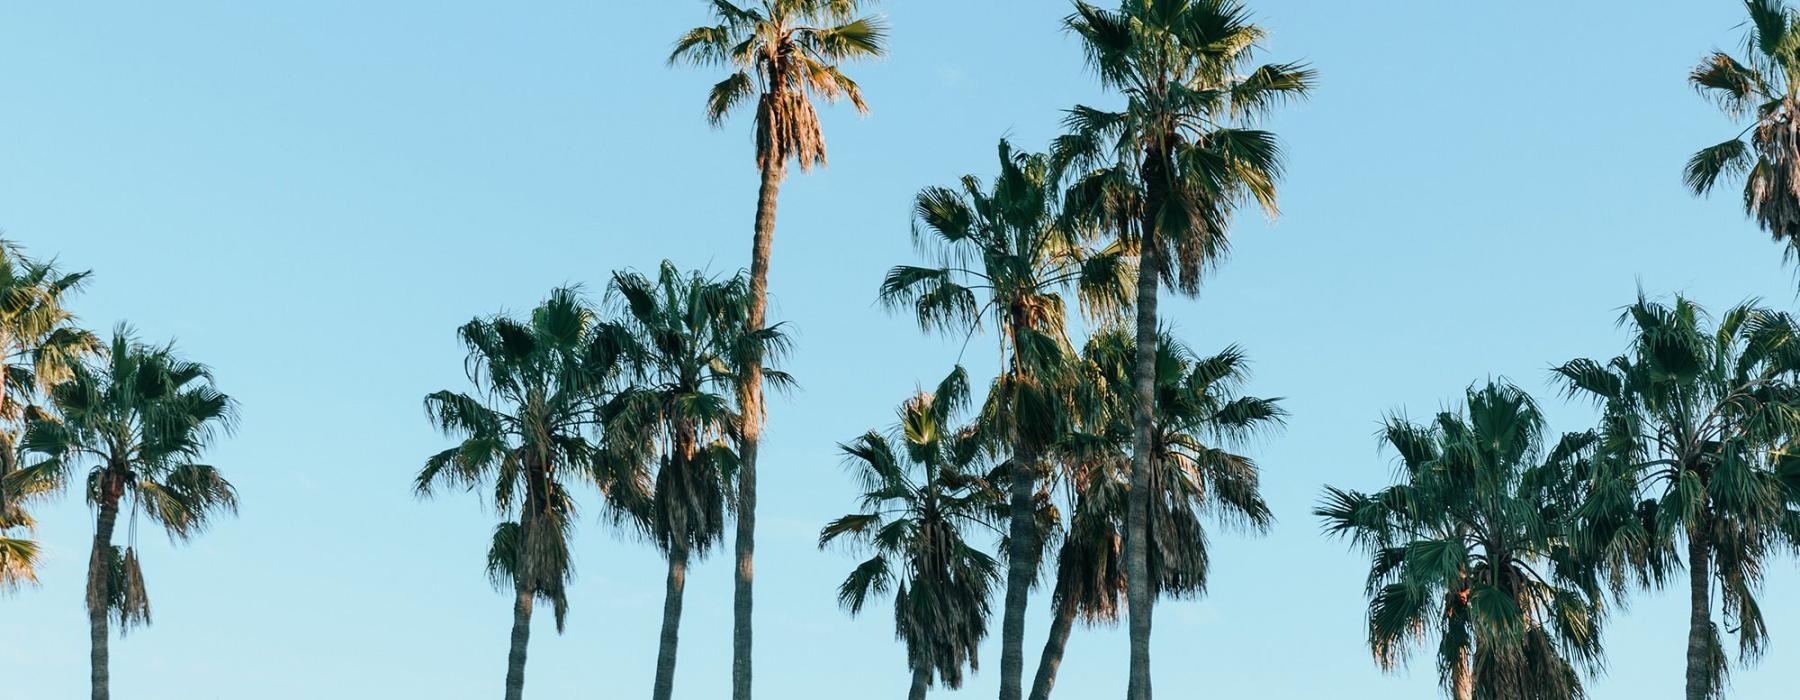 palm trees against a blue sky